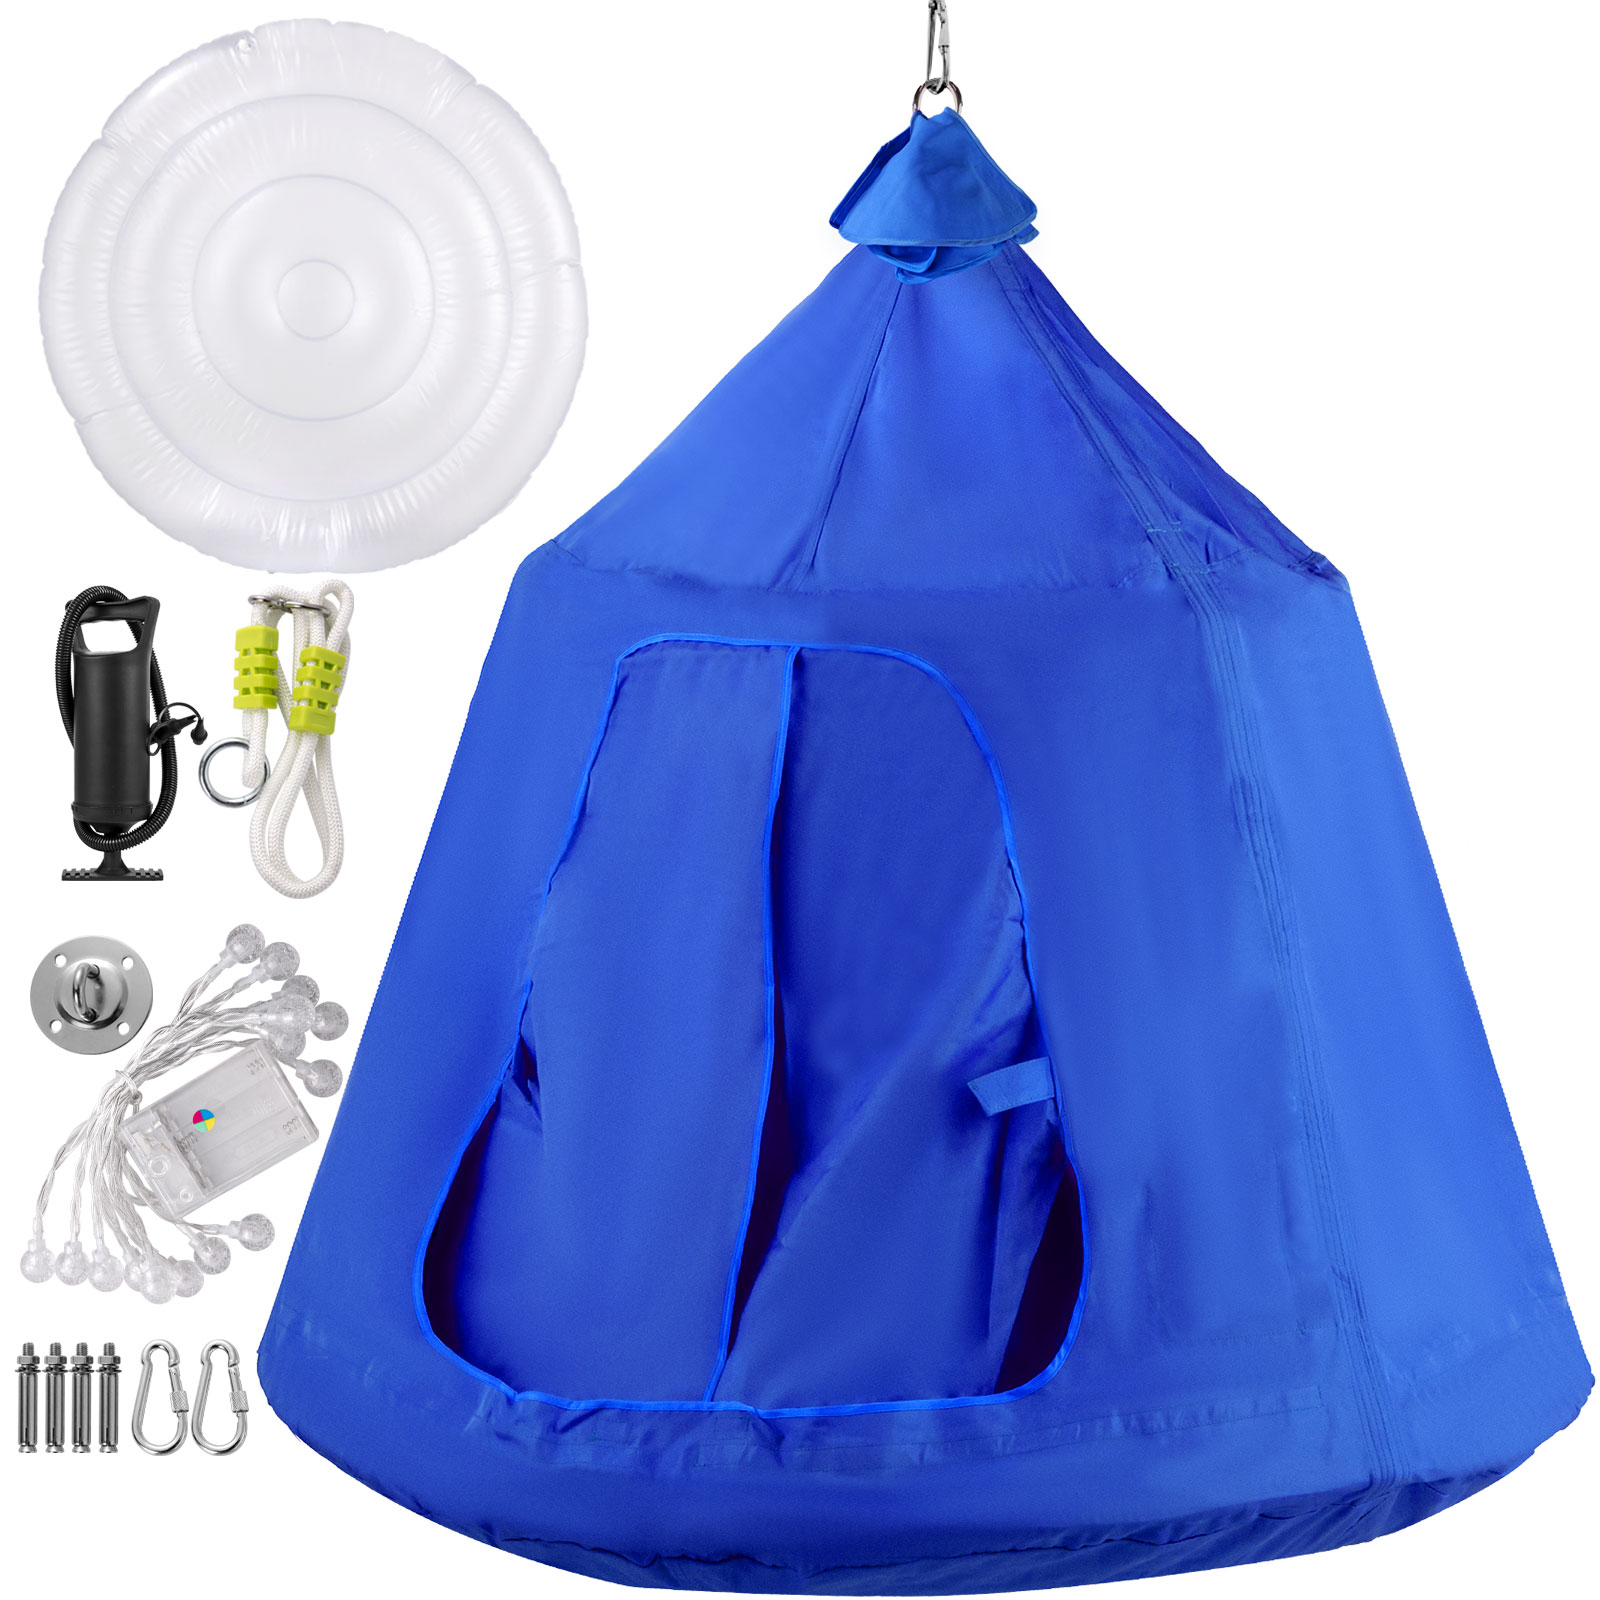 Go! Hangout Hugglepod Hanging Tree Tent With Led Lights, 45dx54 H - Blue от Vevor Many GEOs